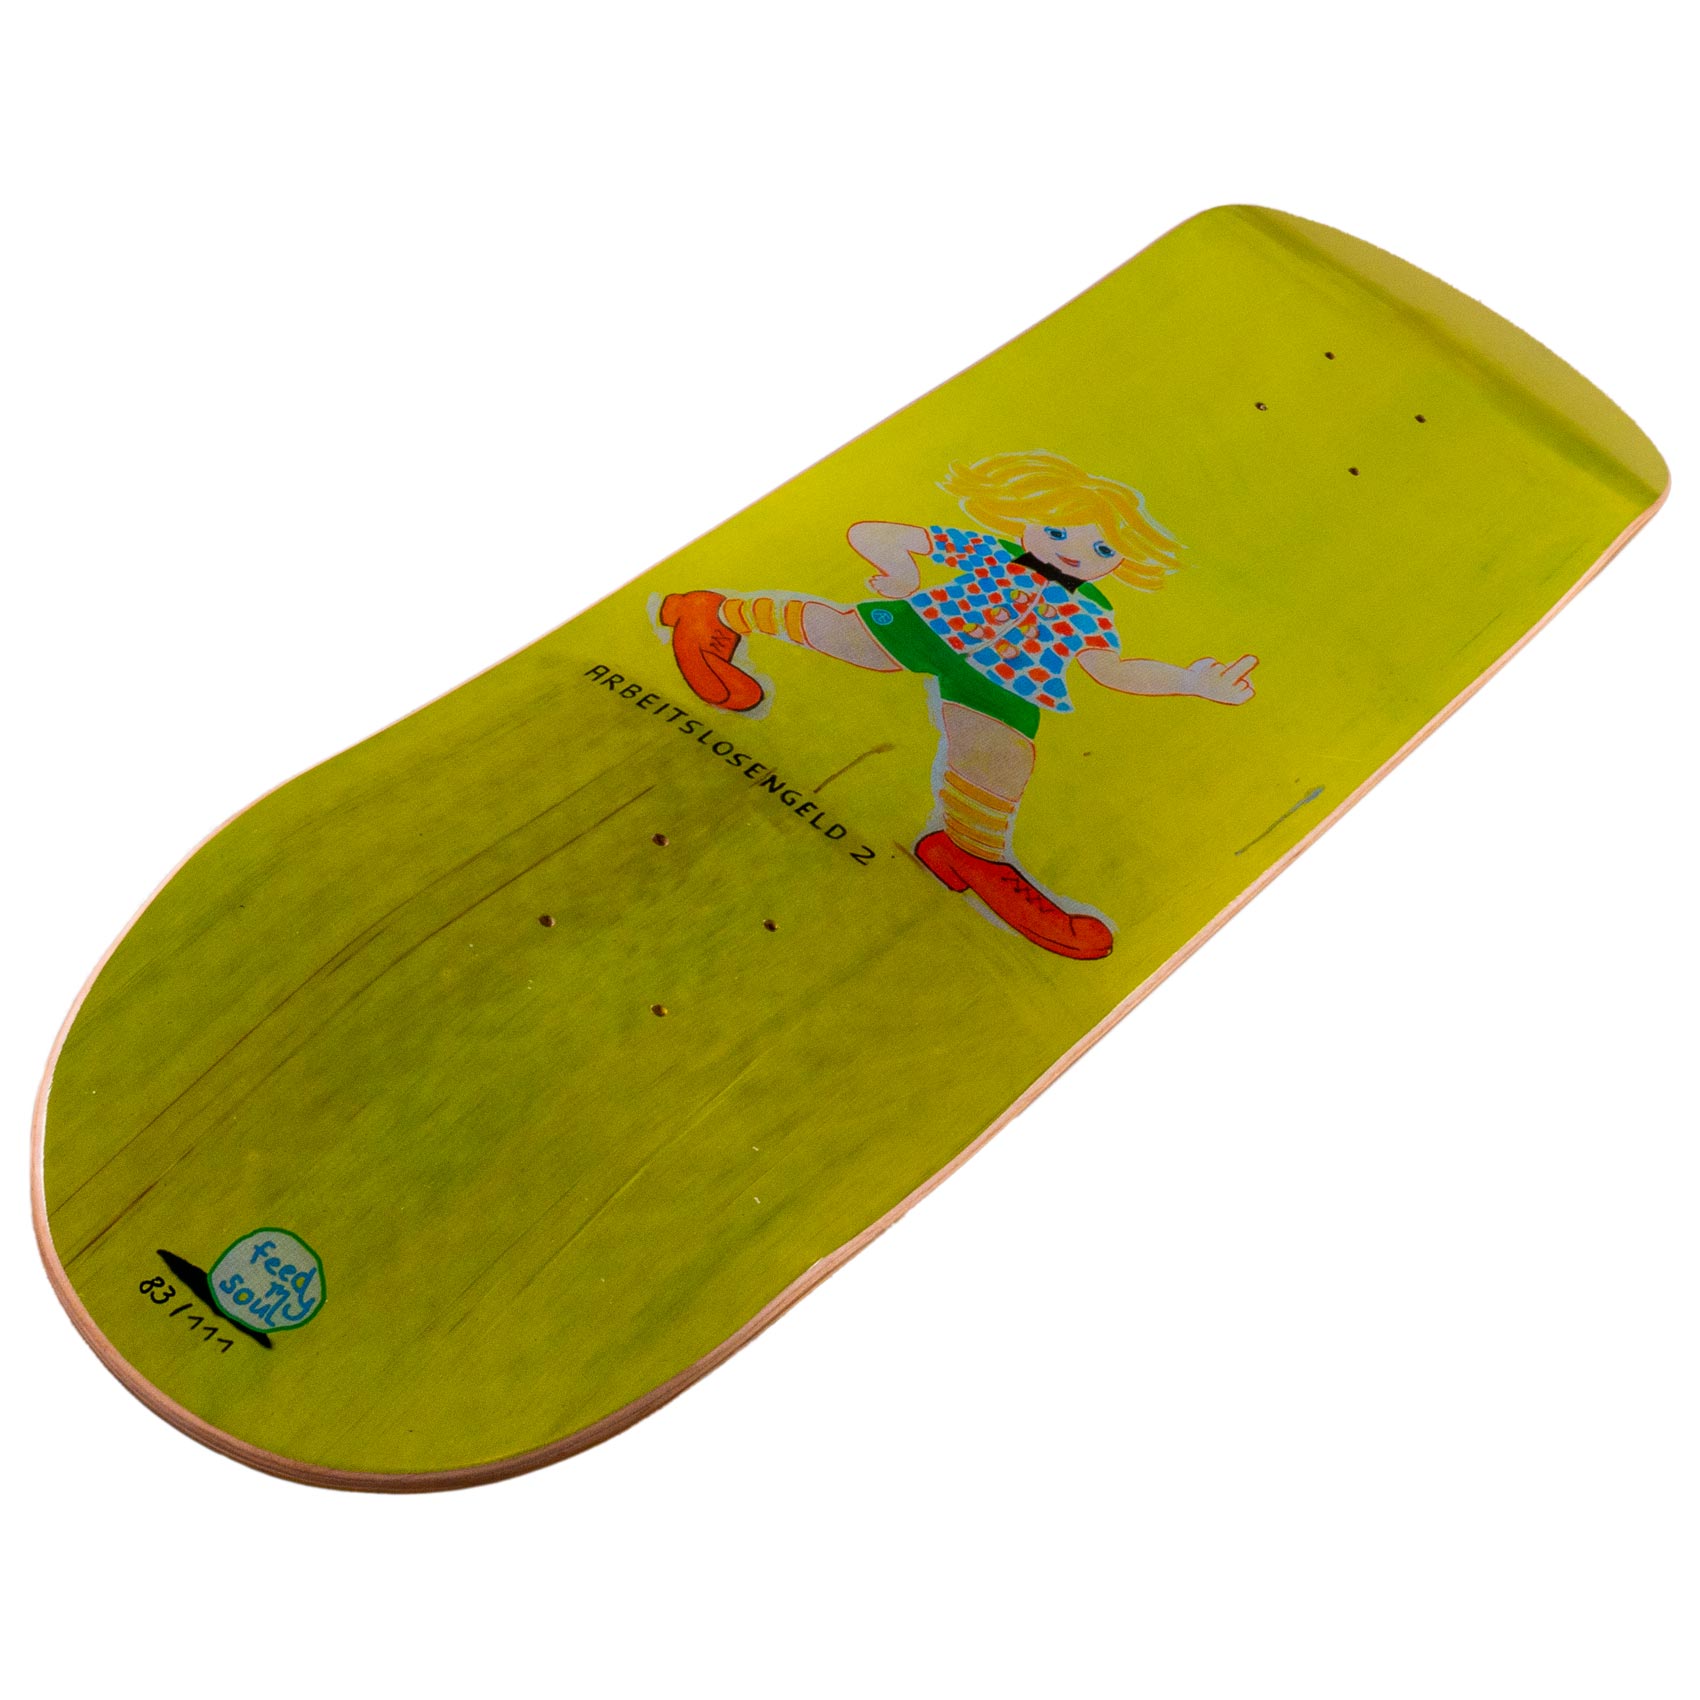 feedmysoul x Ali Endrullat Skateboard Deck ALG 2 8.125"